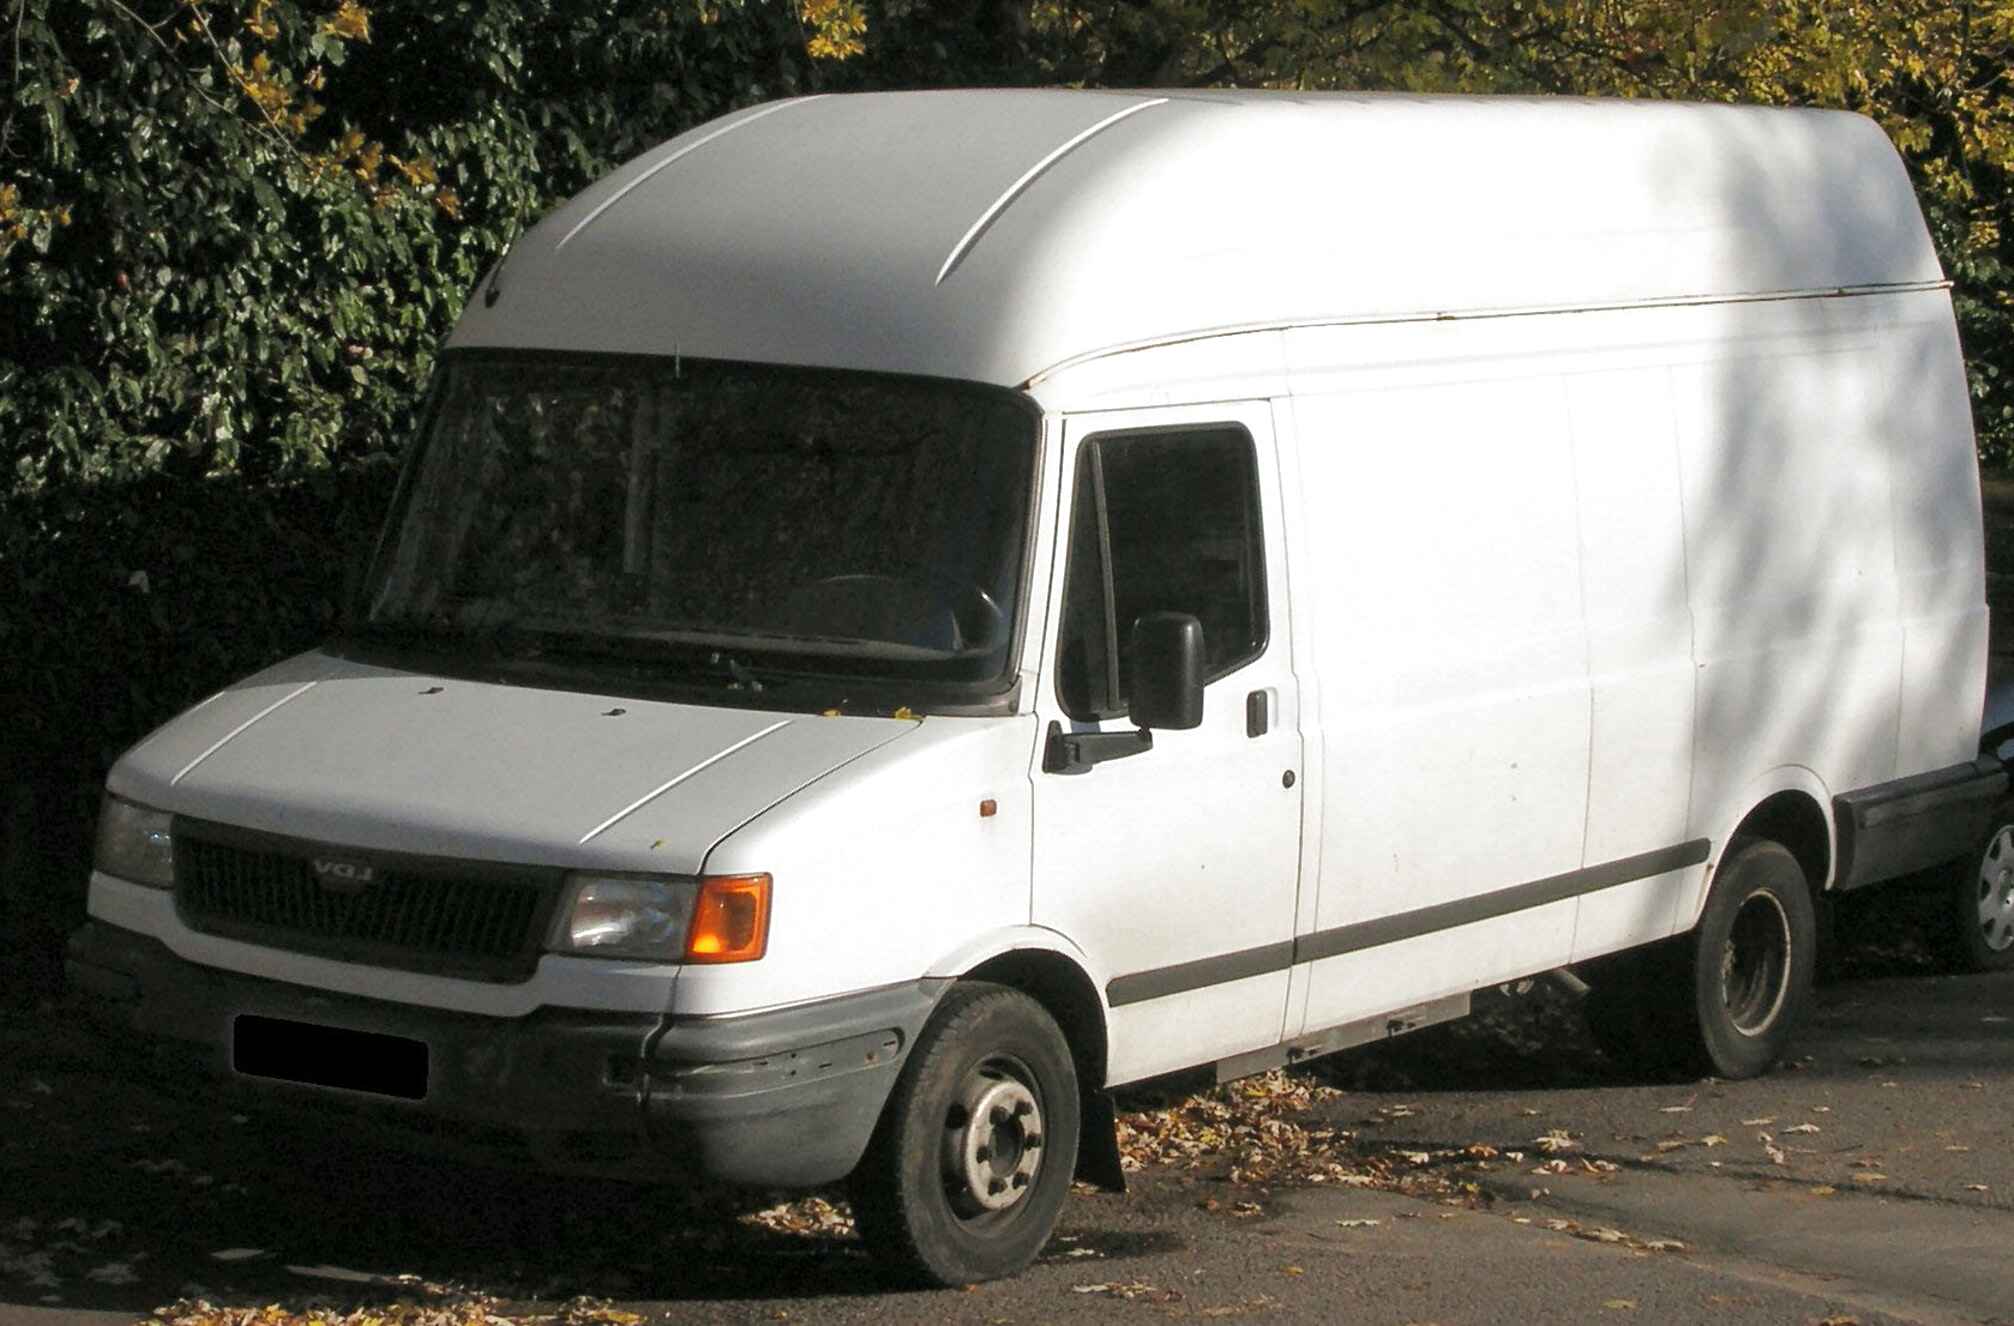 vans for sale on ebay